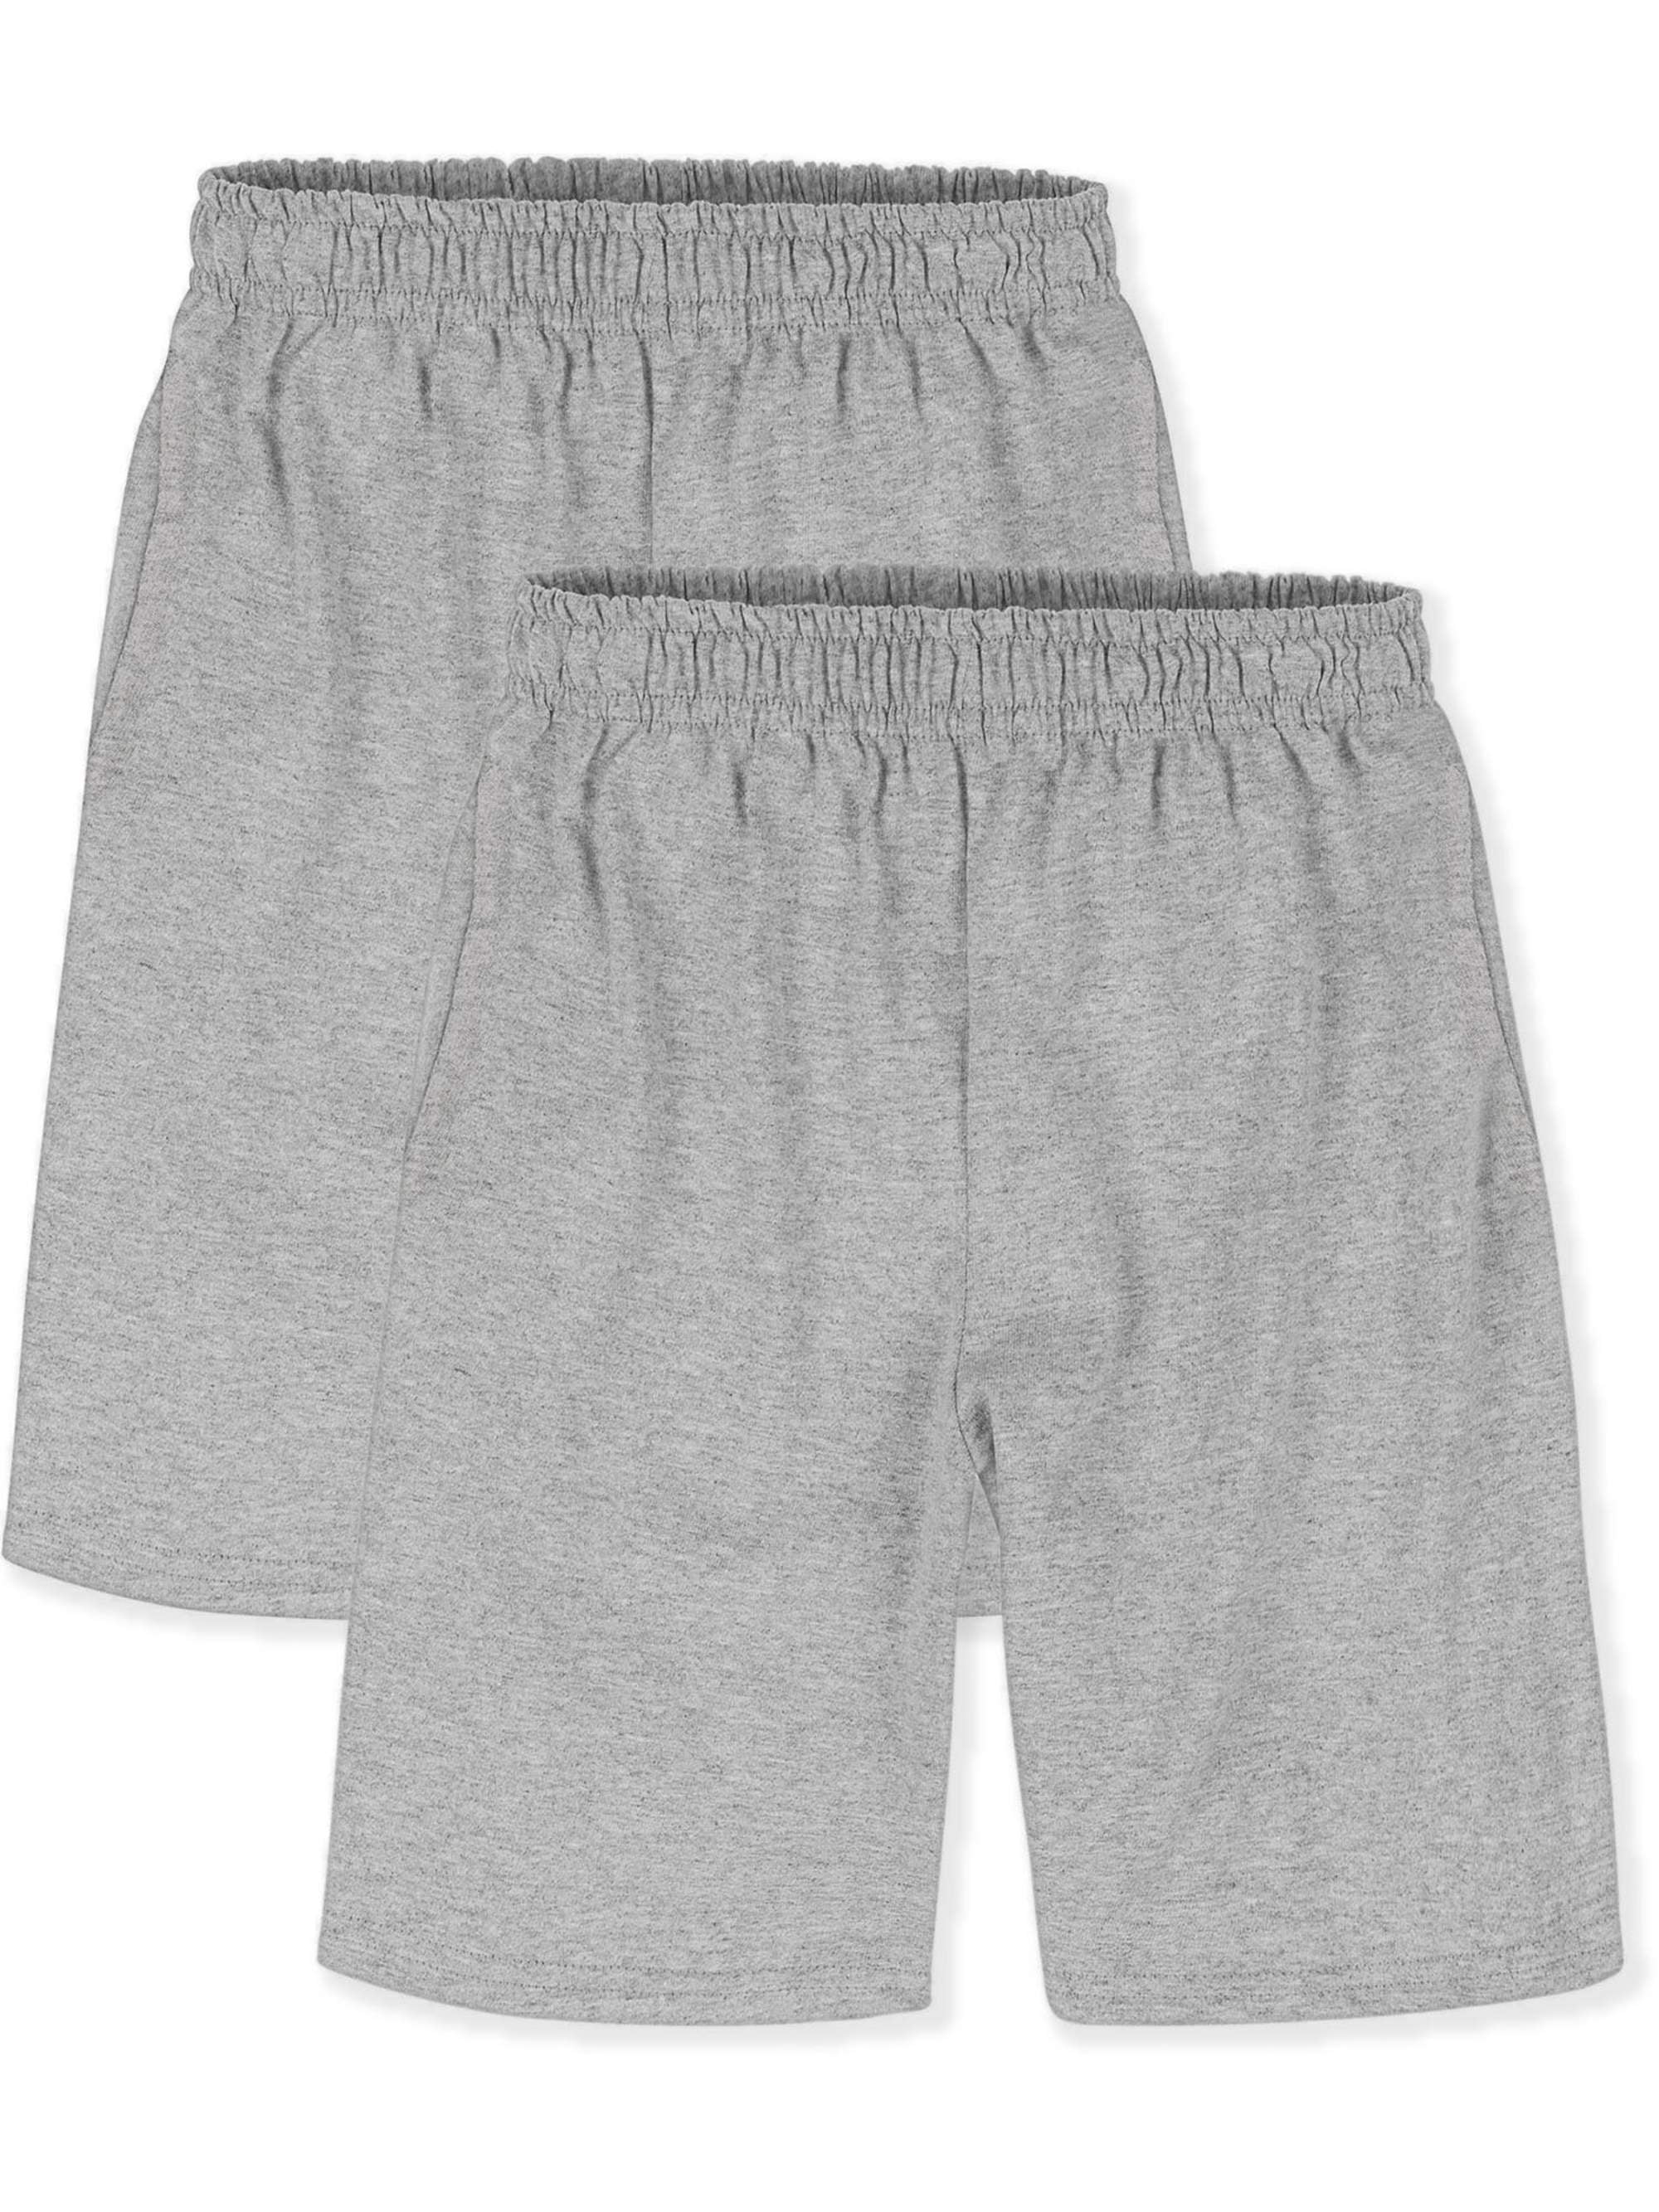 2-Pack Spring&Gege Boys Soft Cotton Knit Jersey Shorts